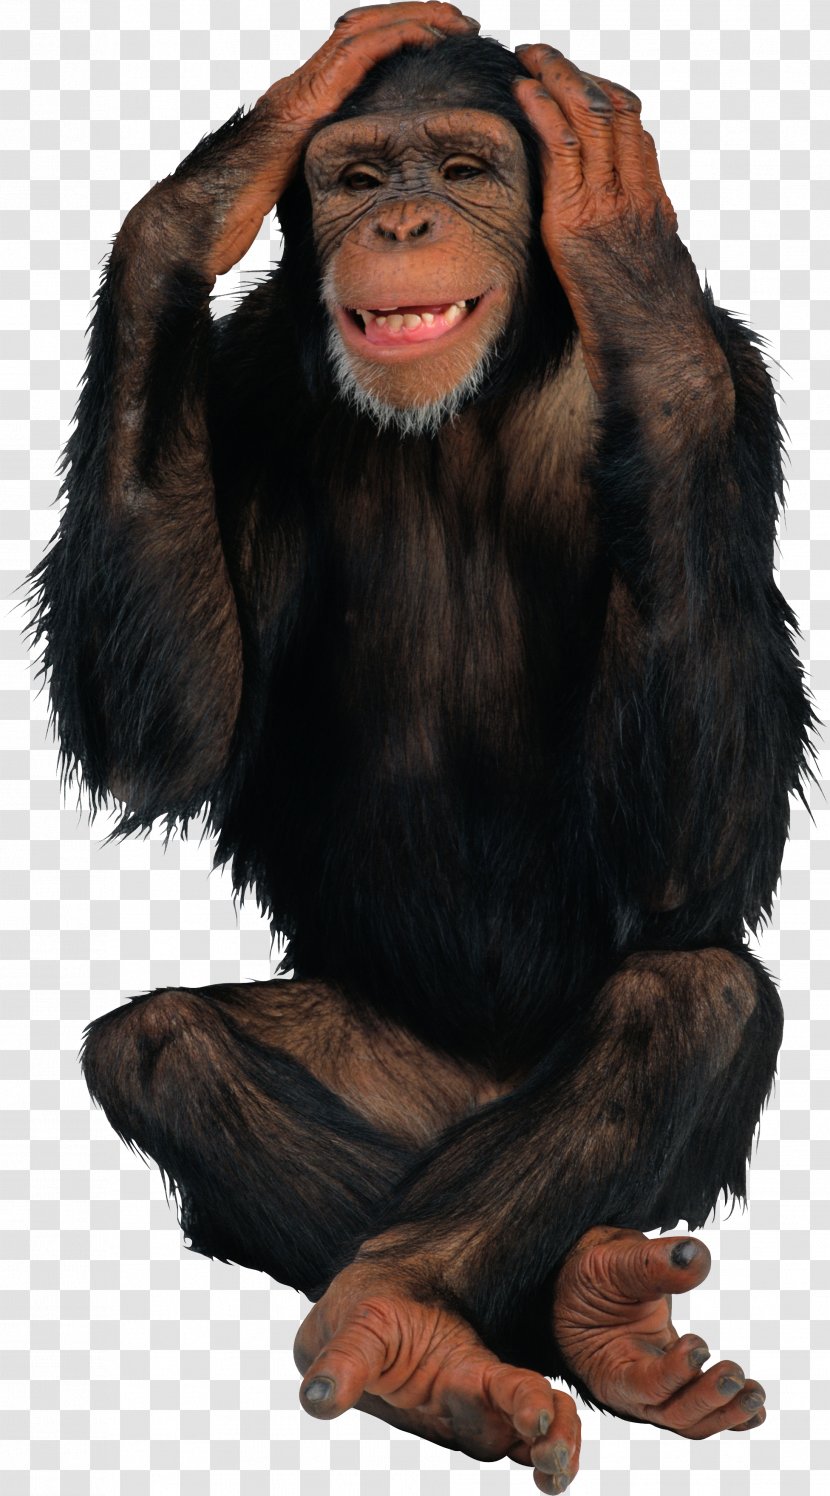 Chimpanzee Monkey Desktop Wallpaper Clip Art - Image File Formats - Black Gorilla Transparent PNG